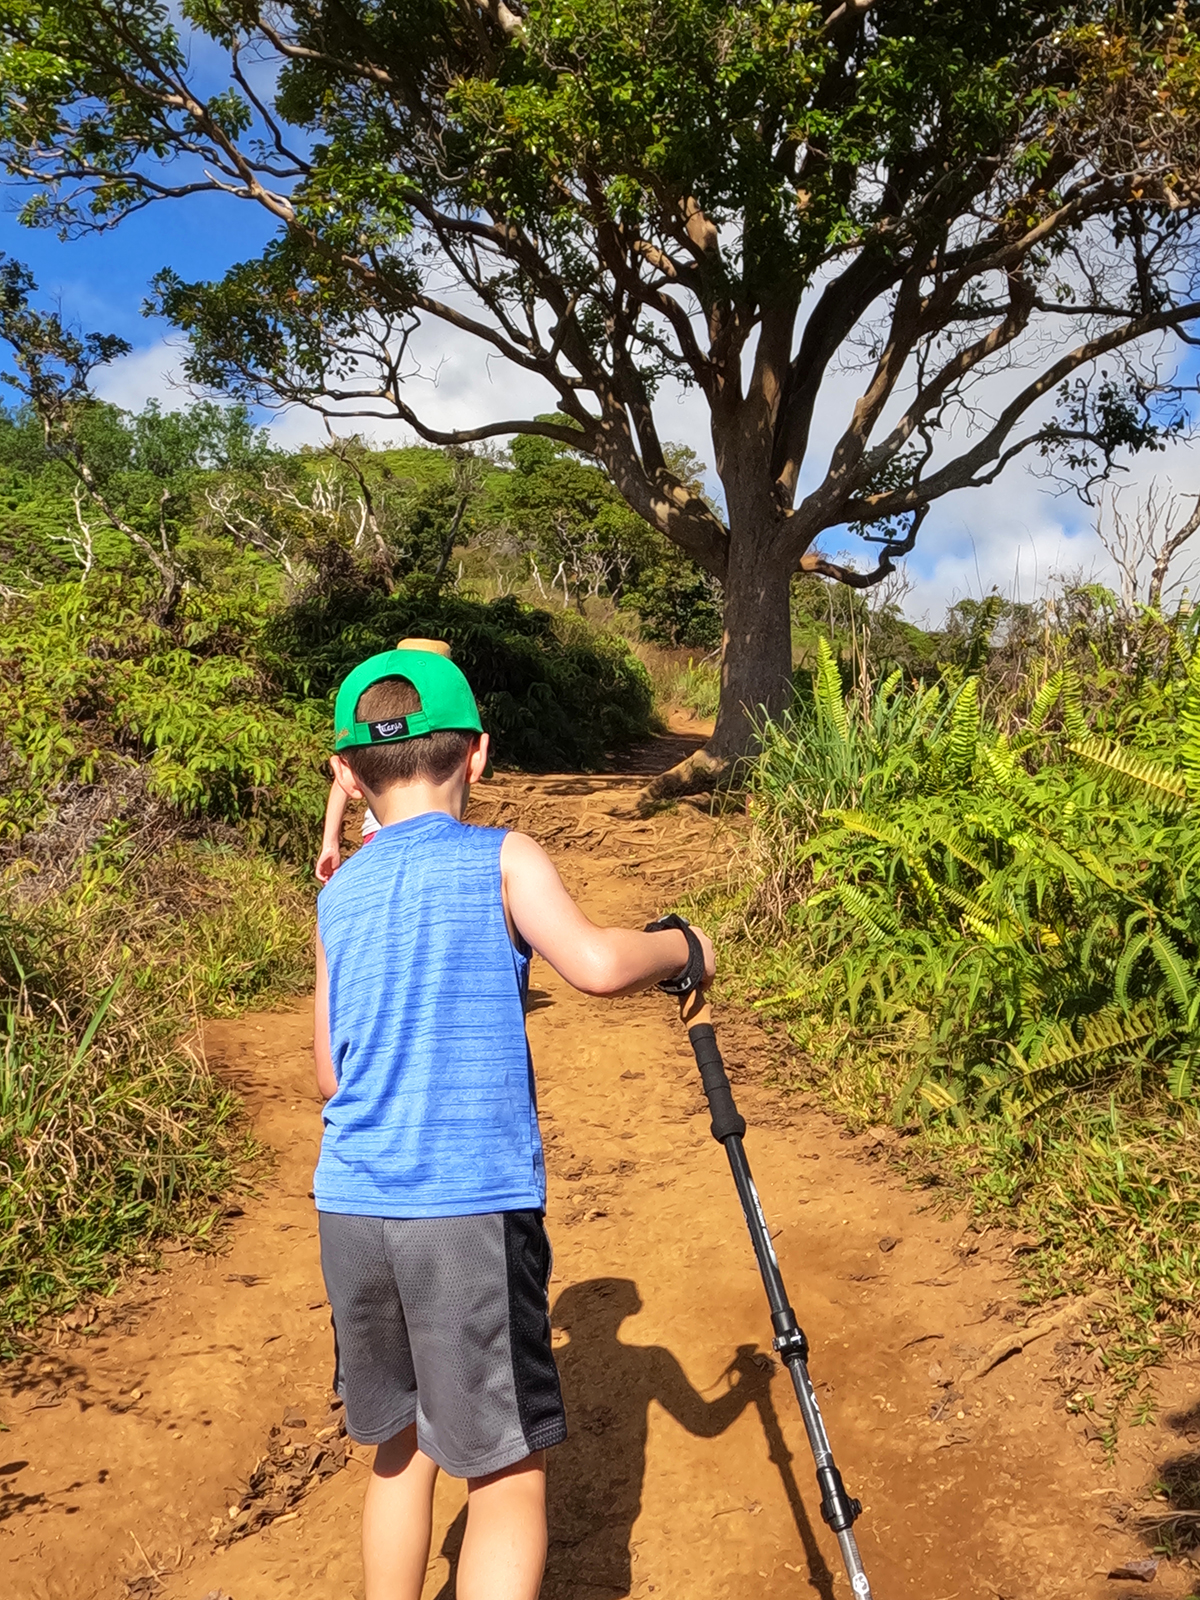 waihe'e hiking ridge trail with boy in blue shirt green hat holding hiking pole